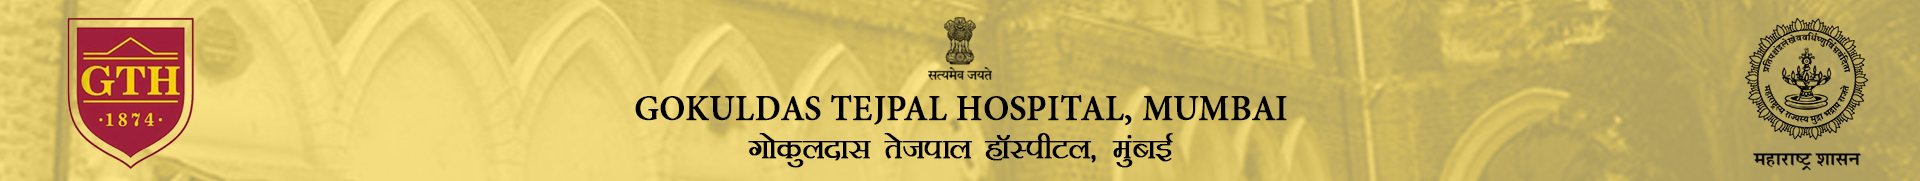 Gokuldas Tejpal Hospital